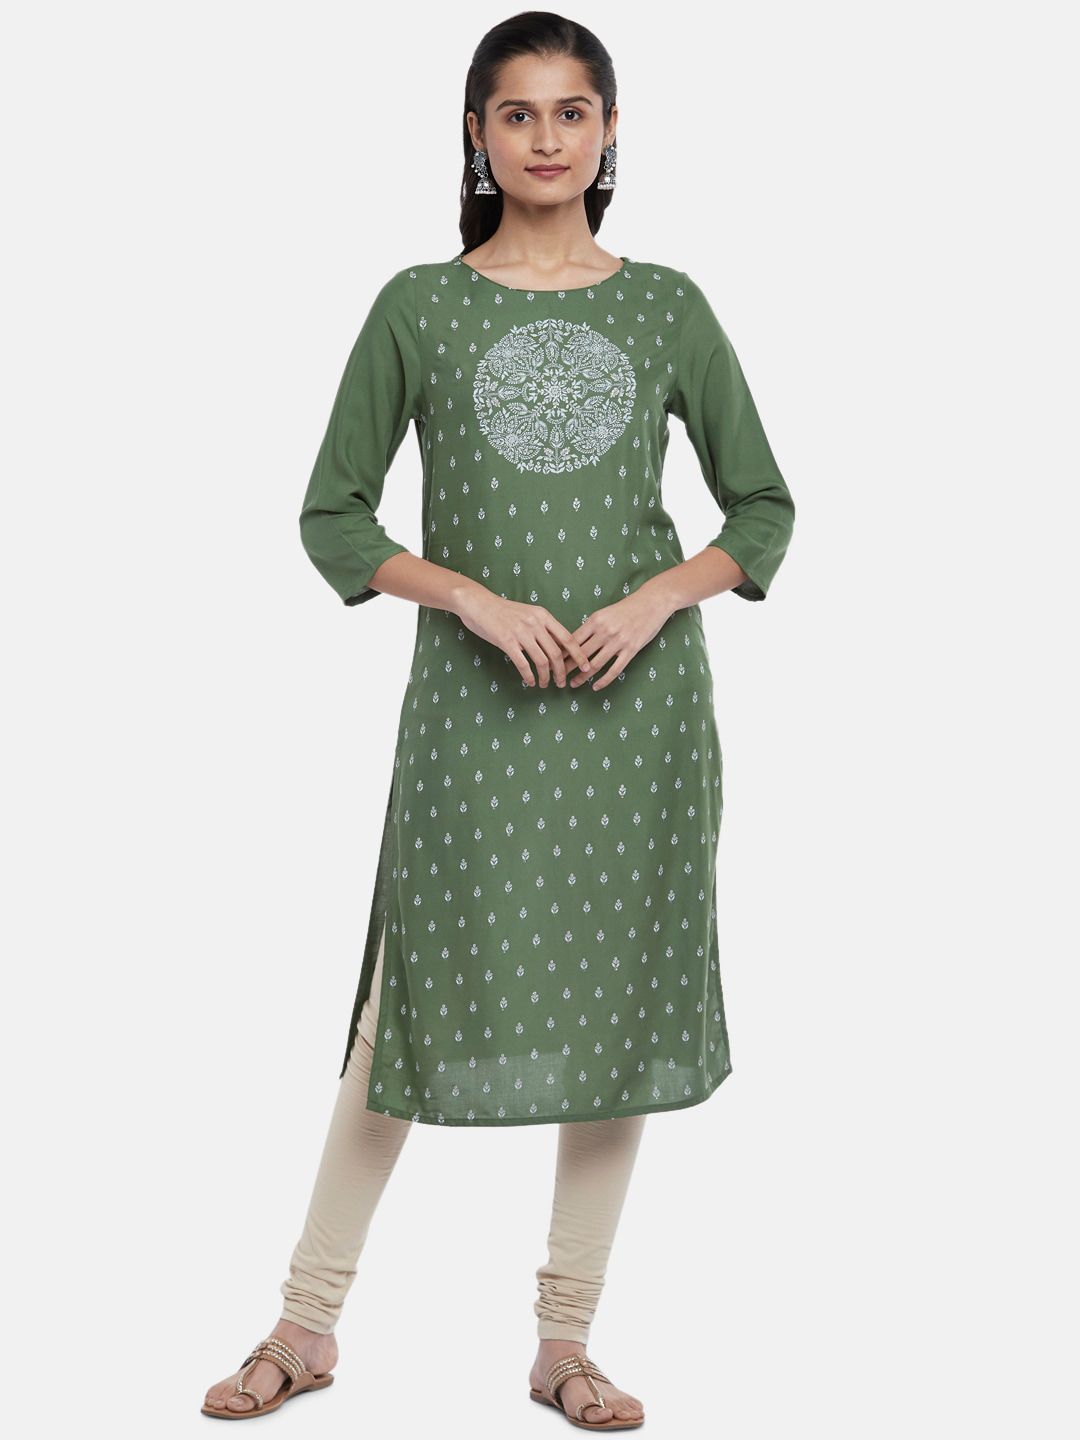 RANGMANCH BY PANTALOONS Women Green & White Ethnic Motifs Yoke Design Straight Kurta Price in India